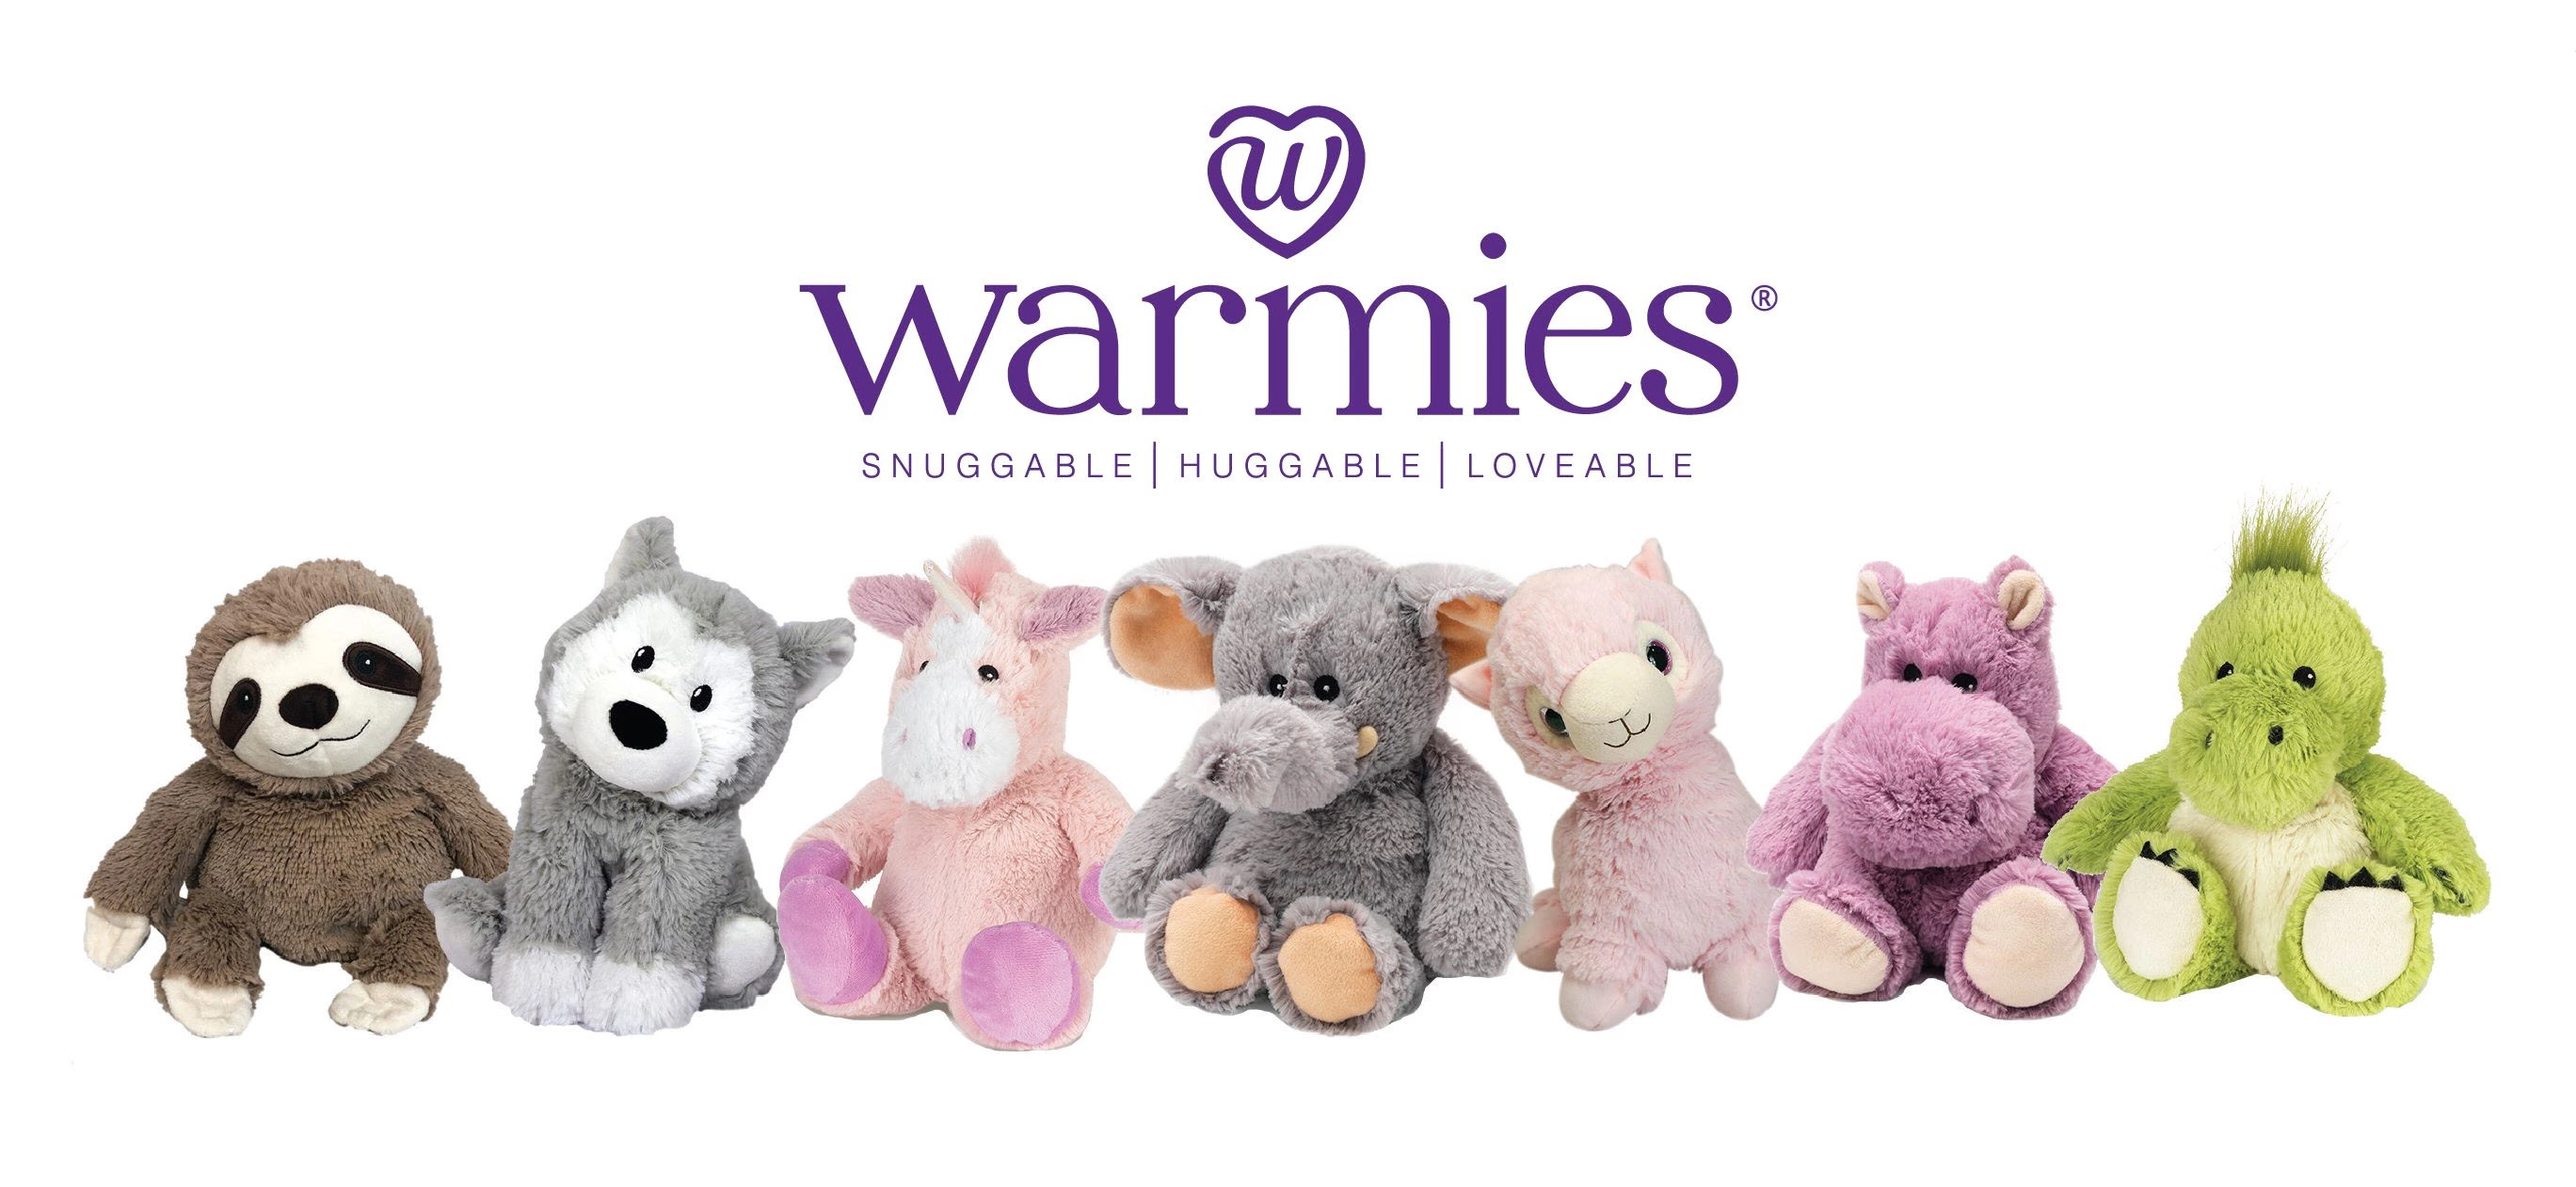 Warmies stuffed animals